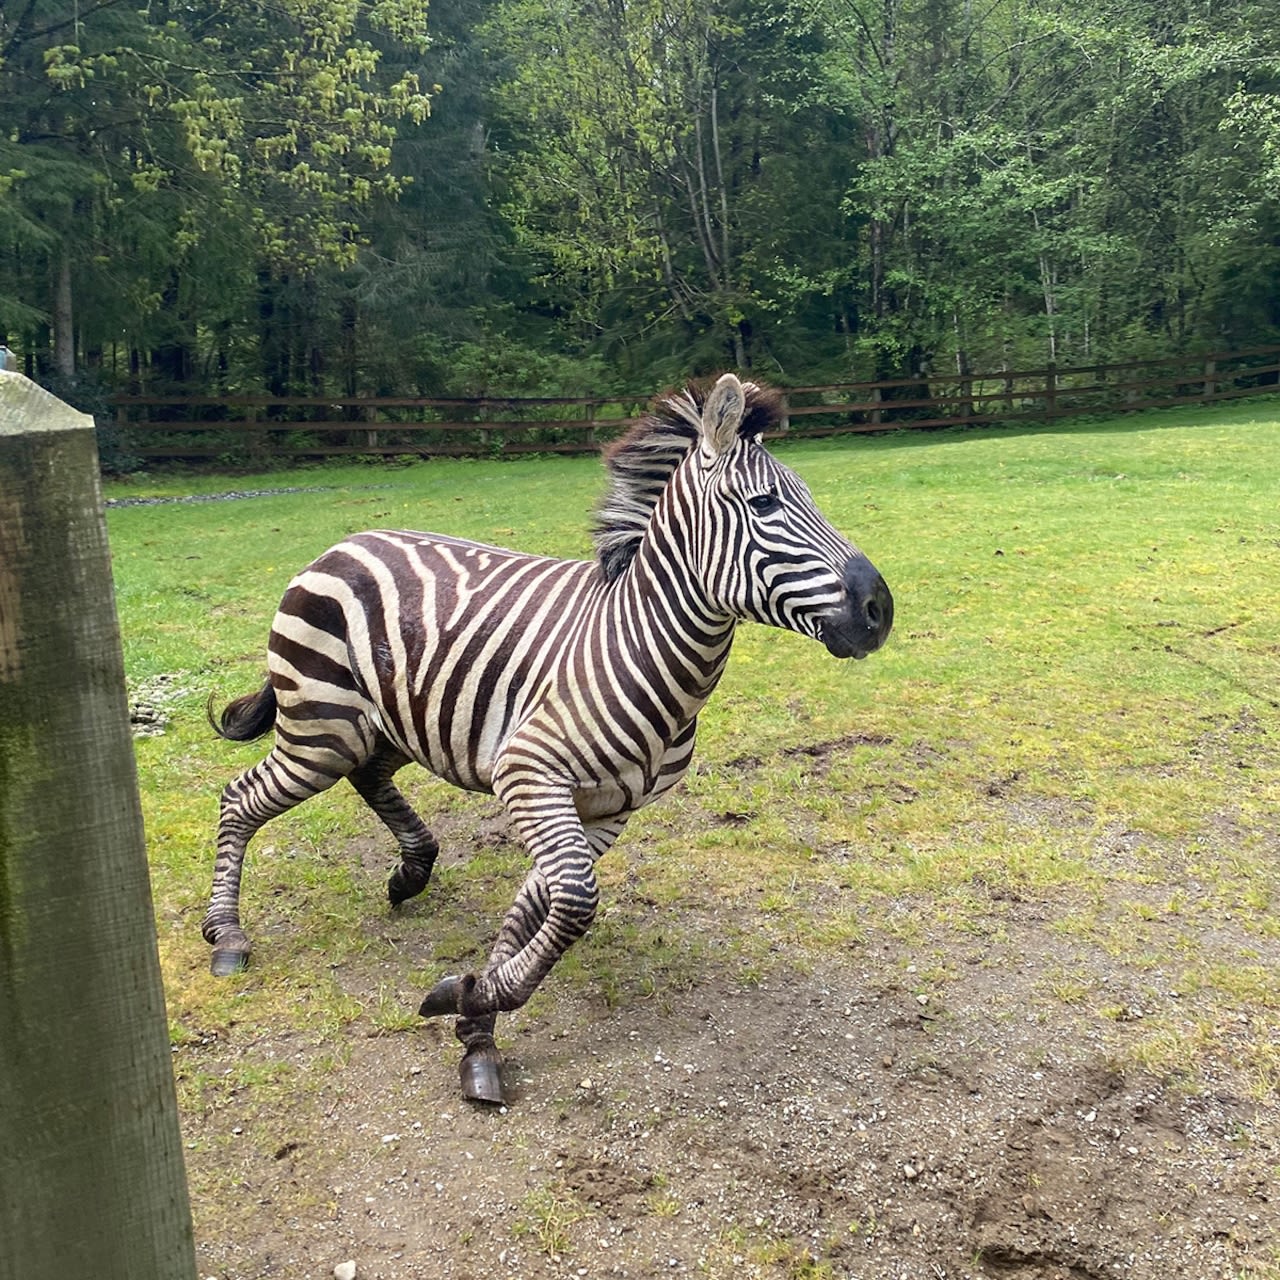 Zebra caught on camera, remains at large in Washington